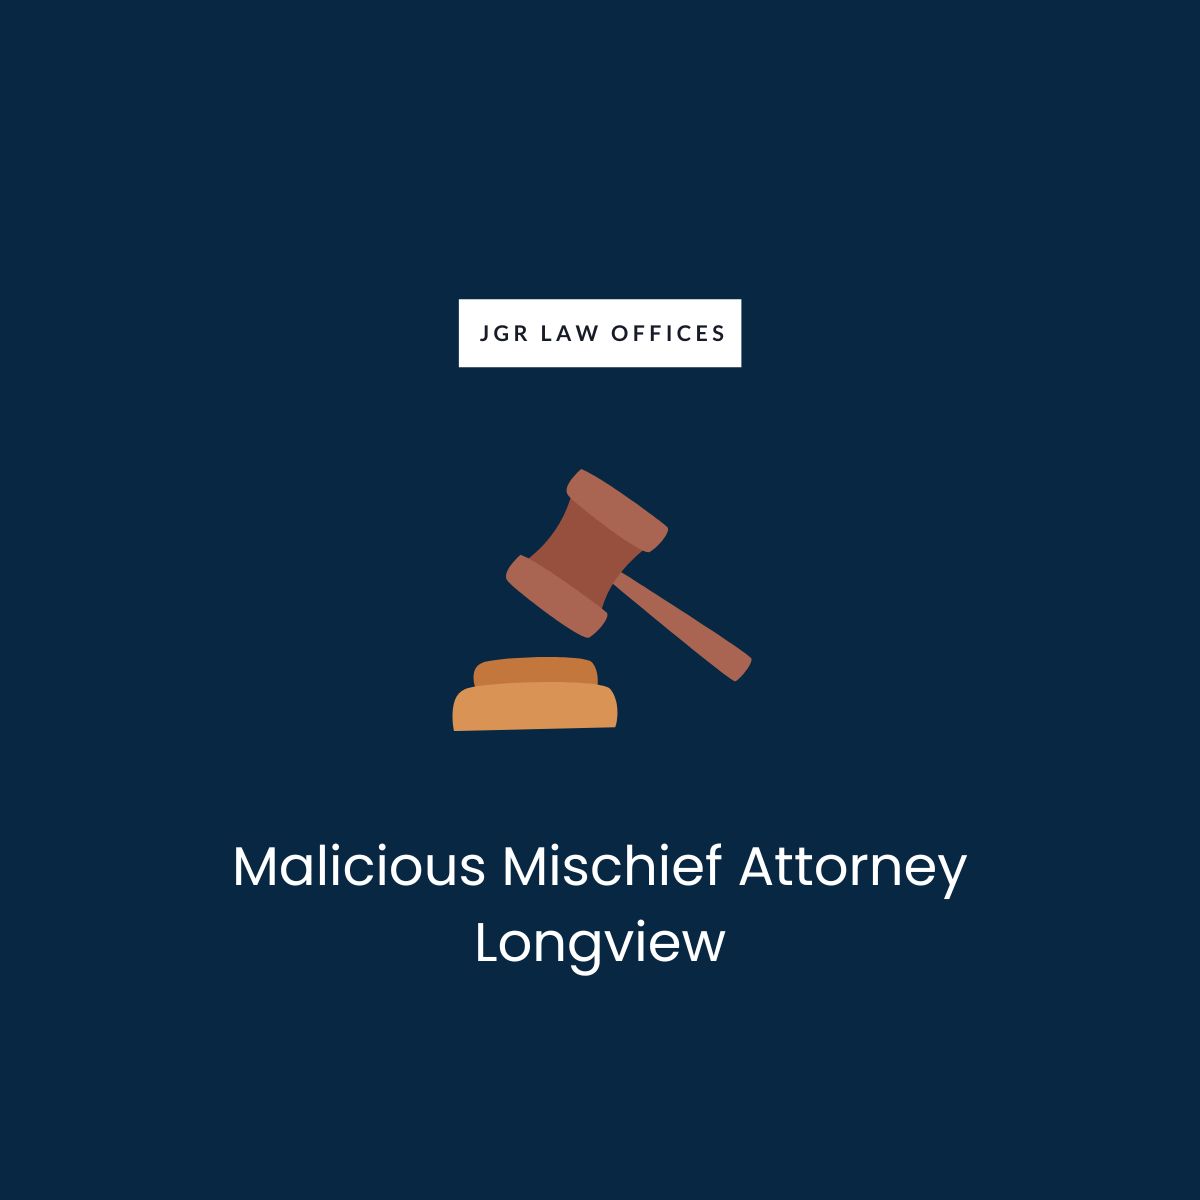 Malicious Mischief Attorney Longview